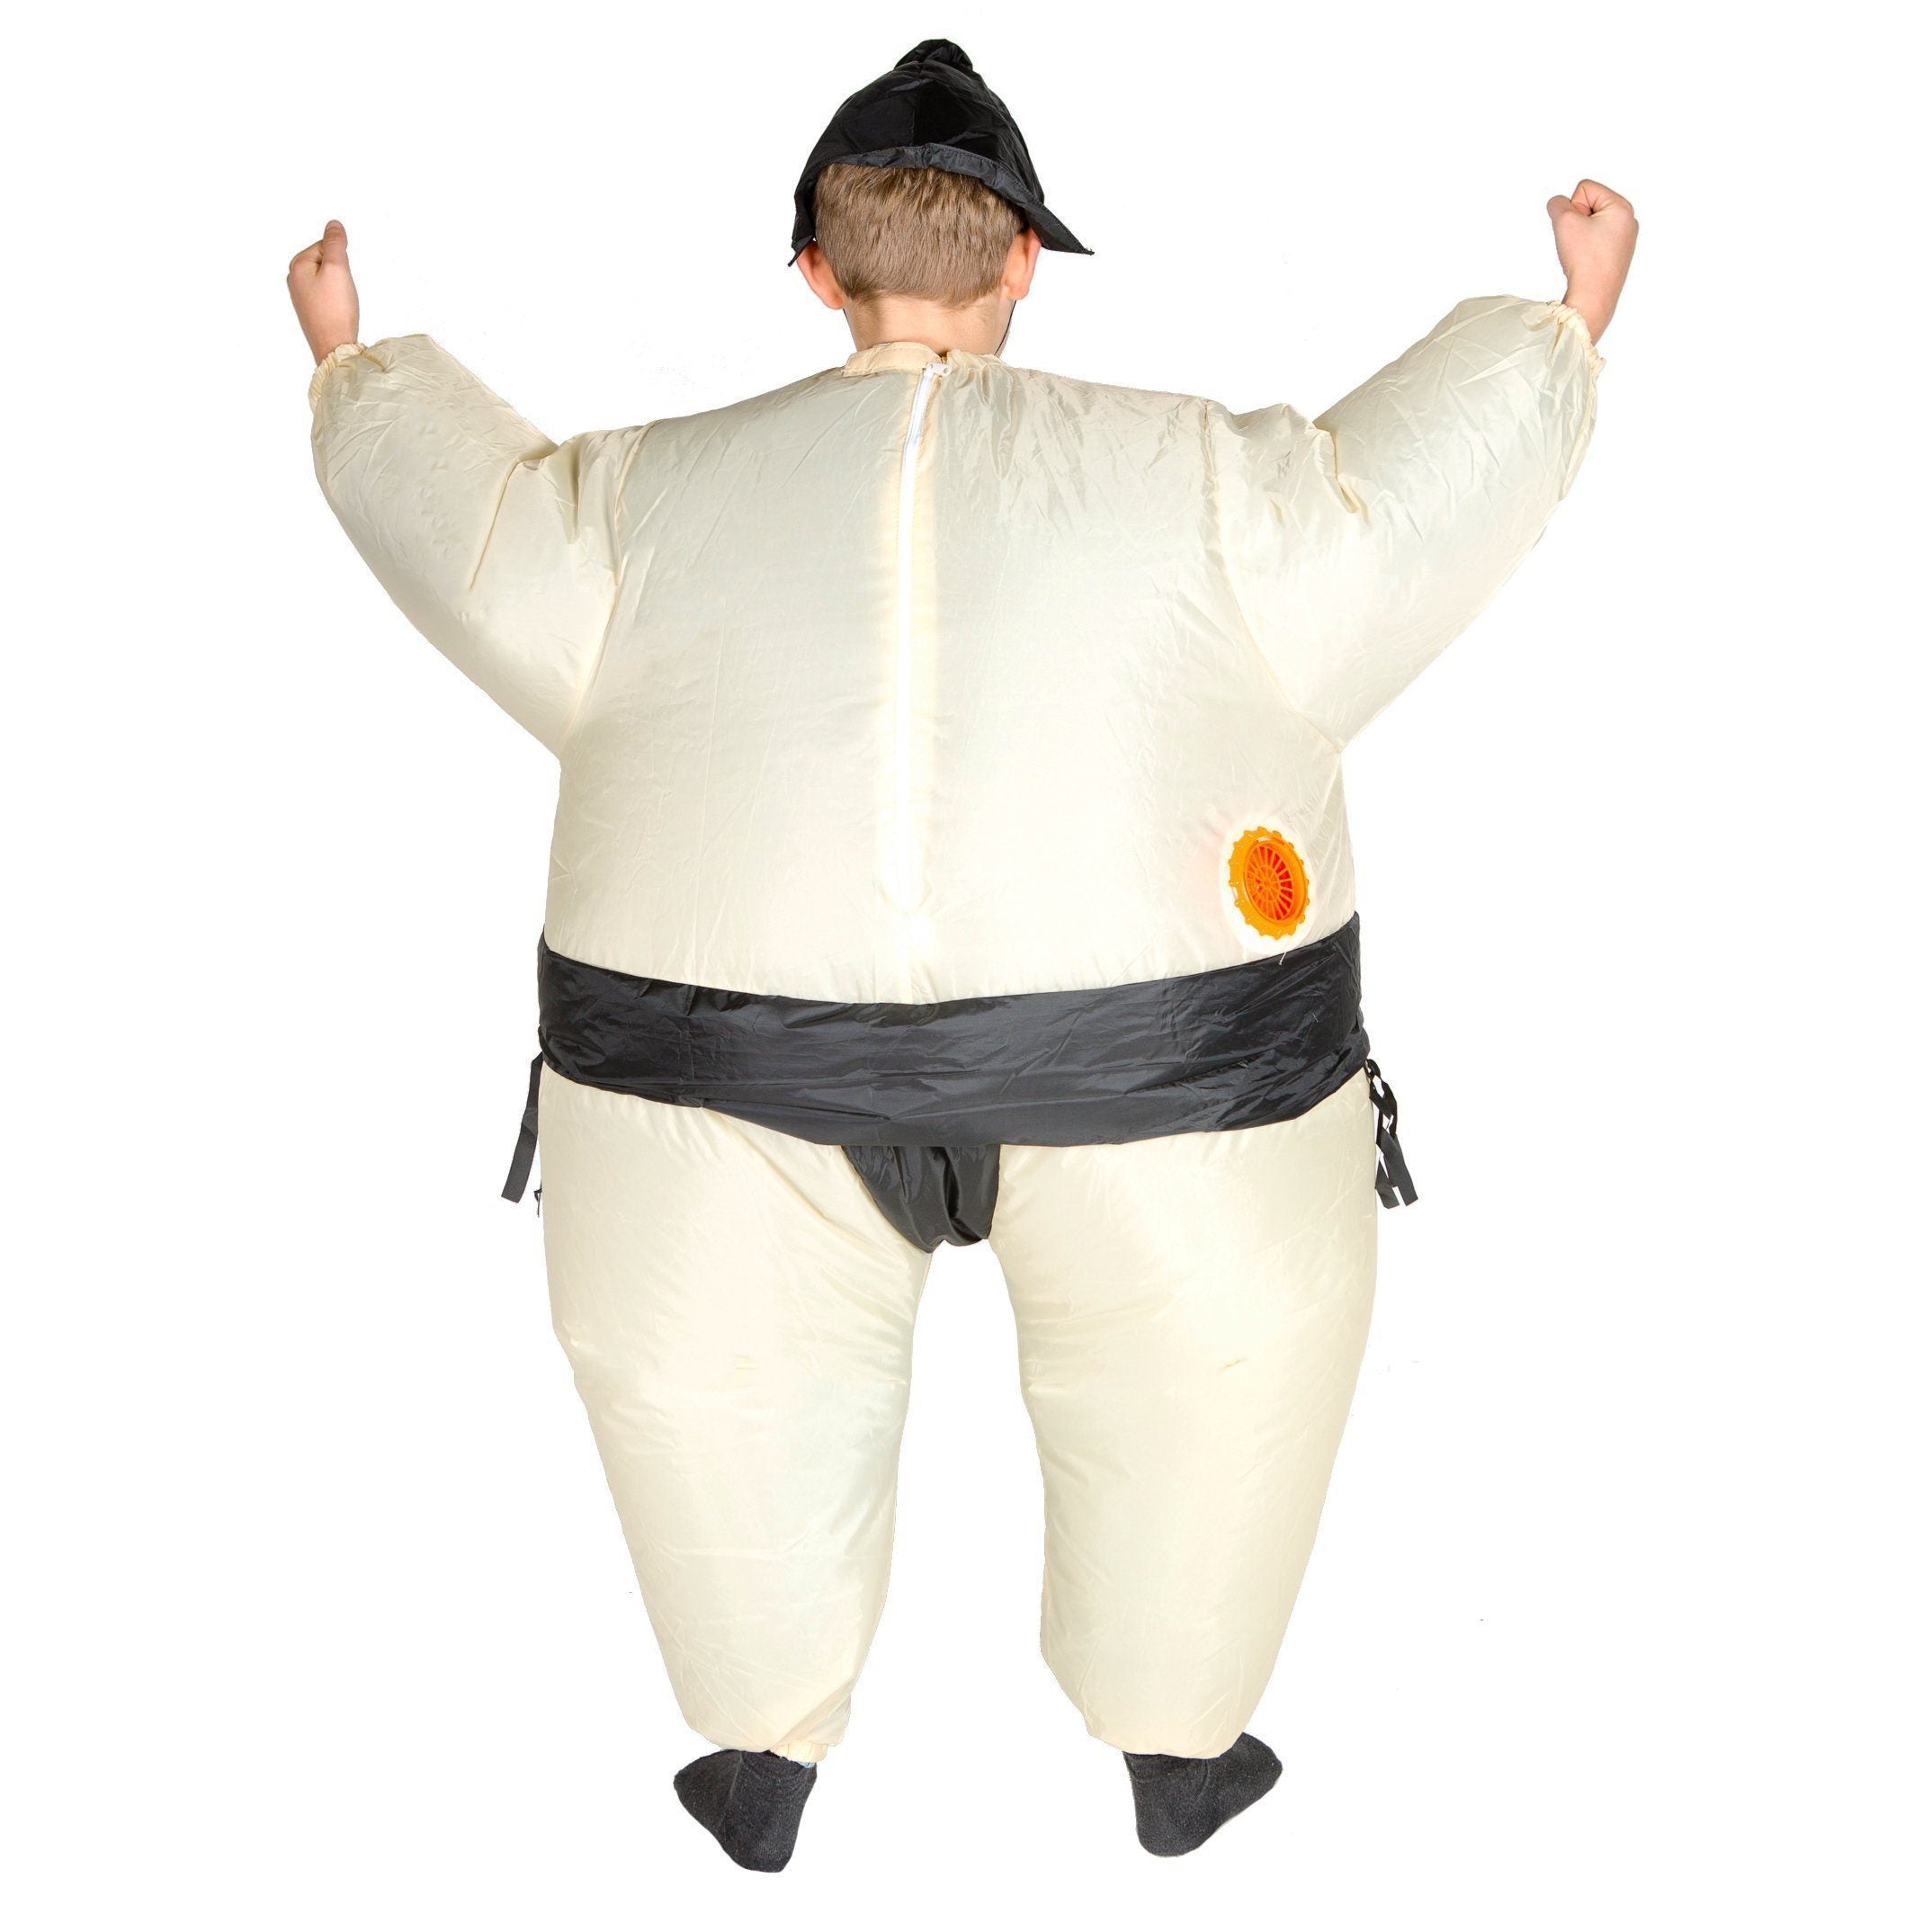 Fancy Dress - Kids Inflatable Sumo Wrestler Costume